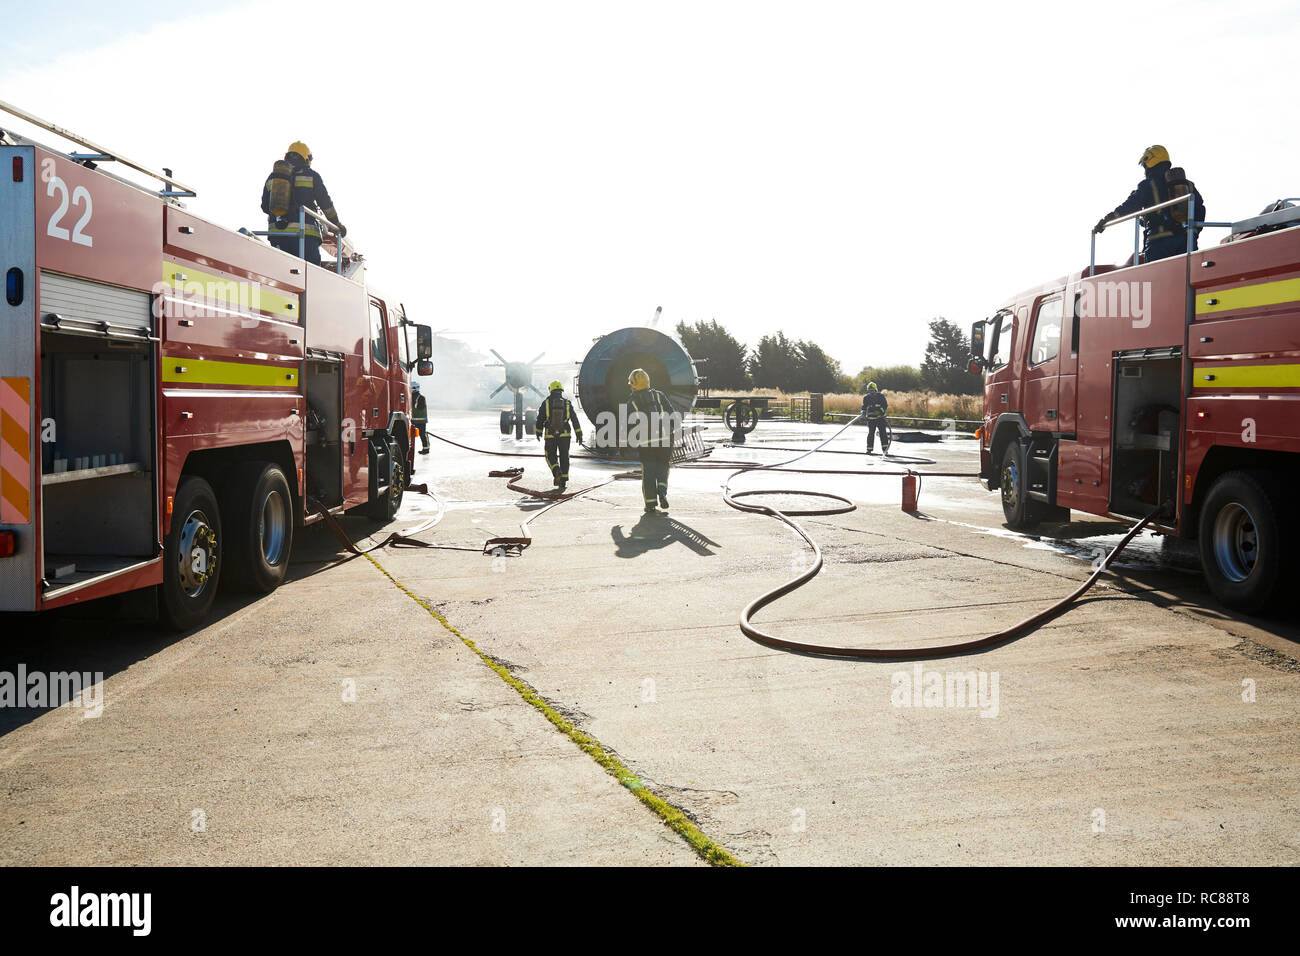 Firemen putting out fire on old training aeroplane, Darlington, UK Stock Photo